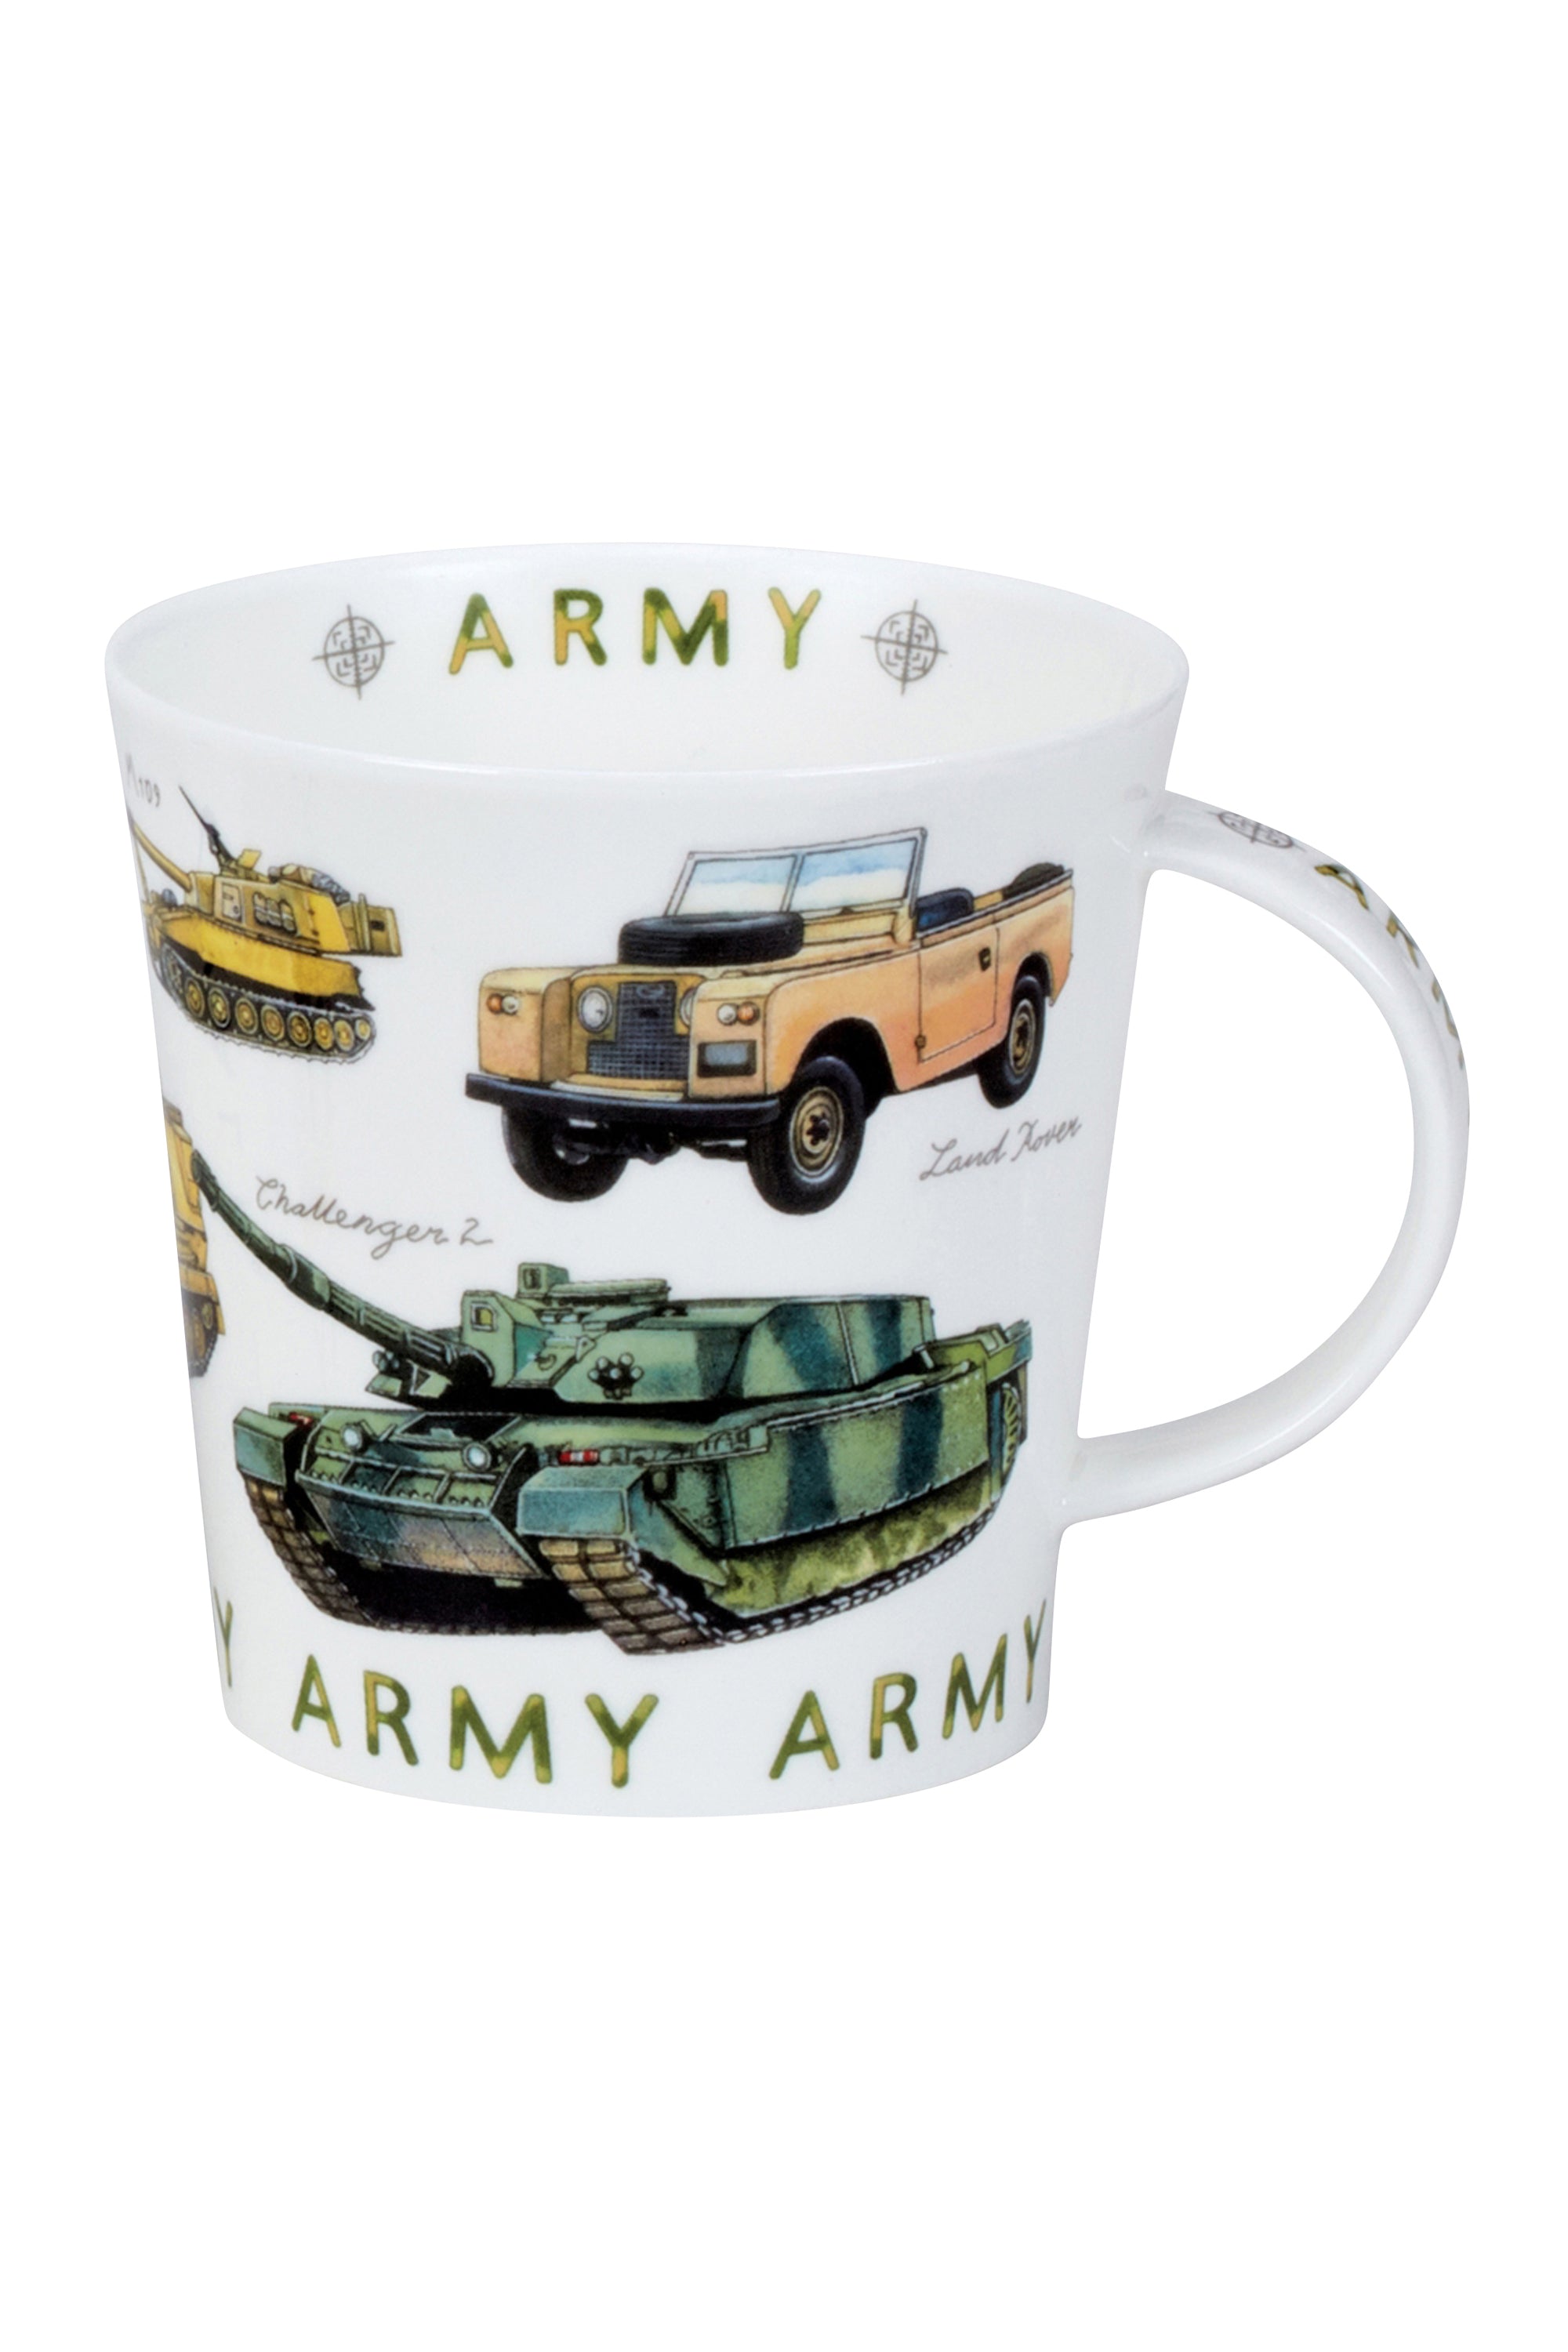 Armed Forces Army Mug